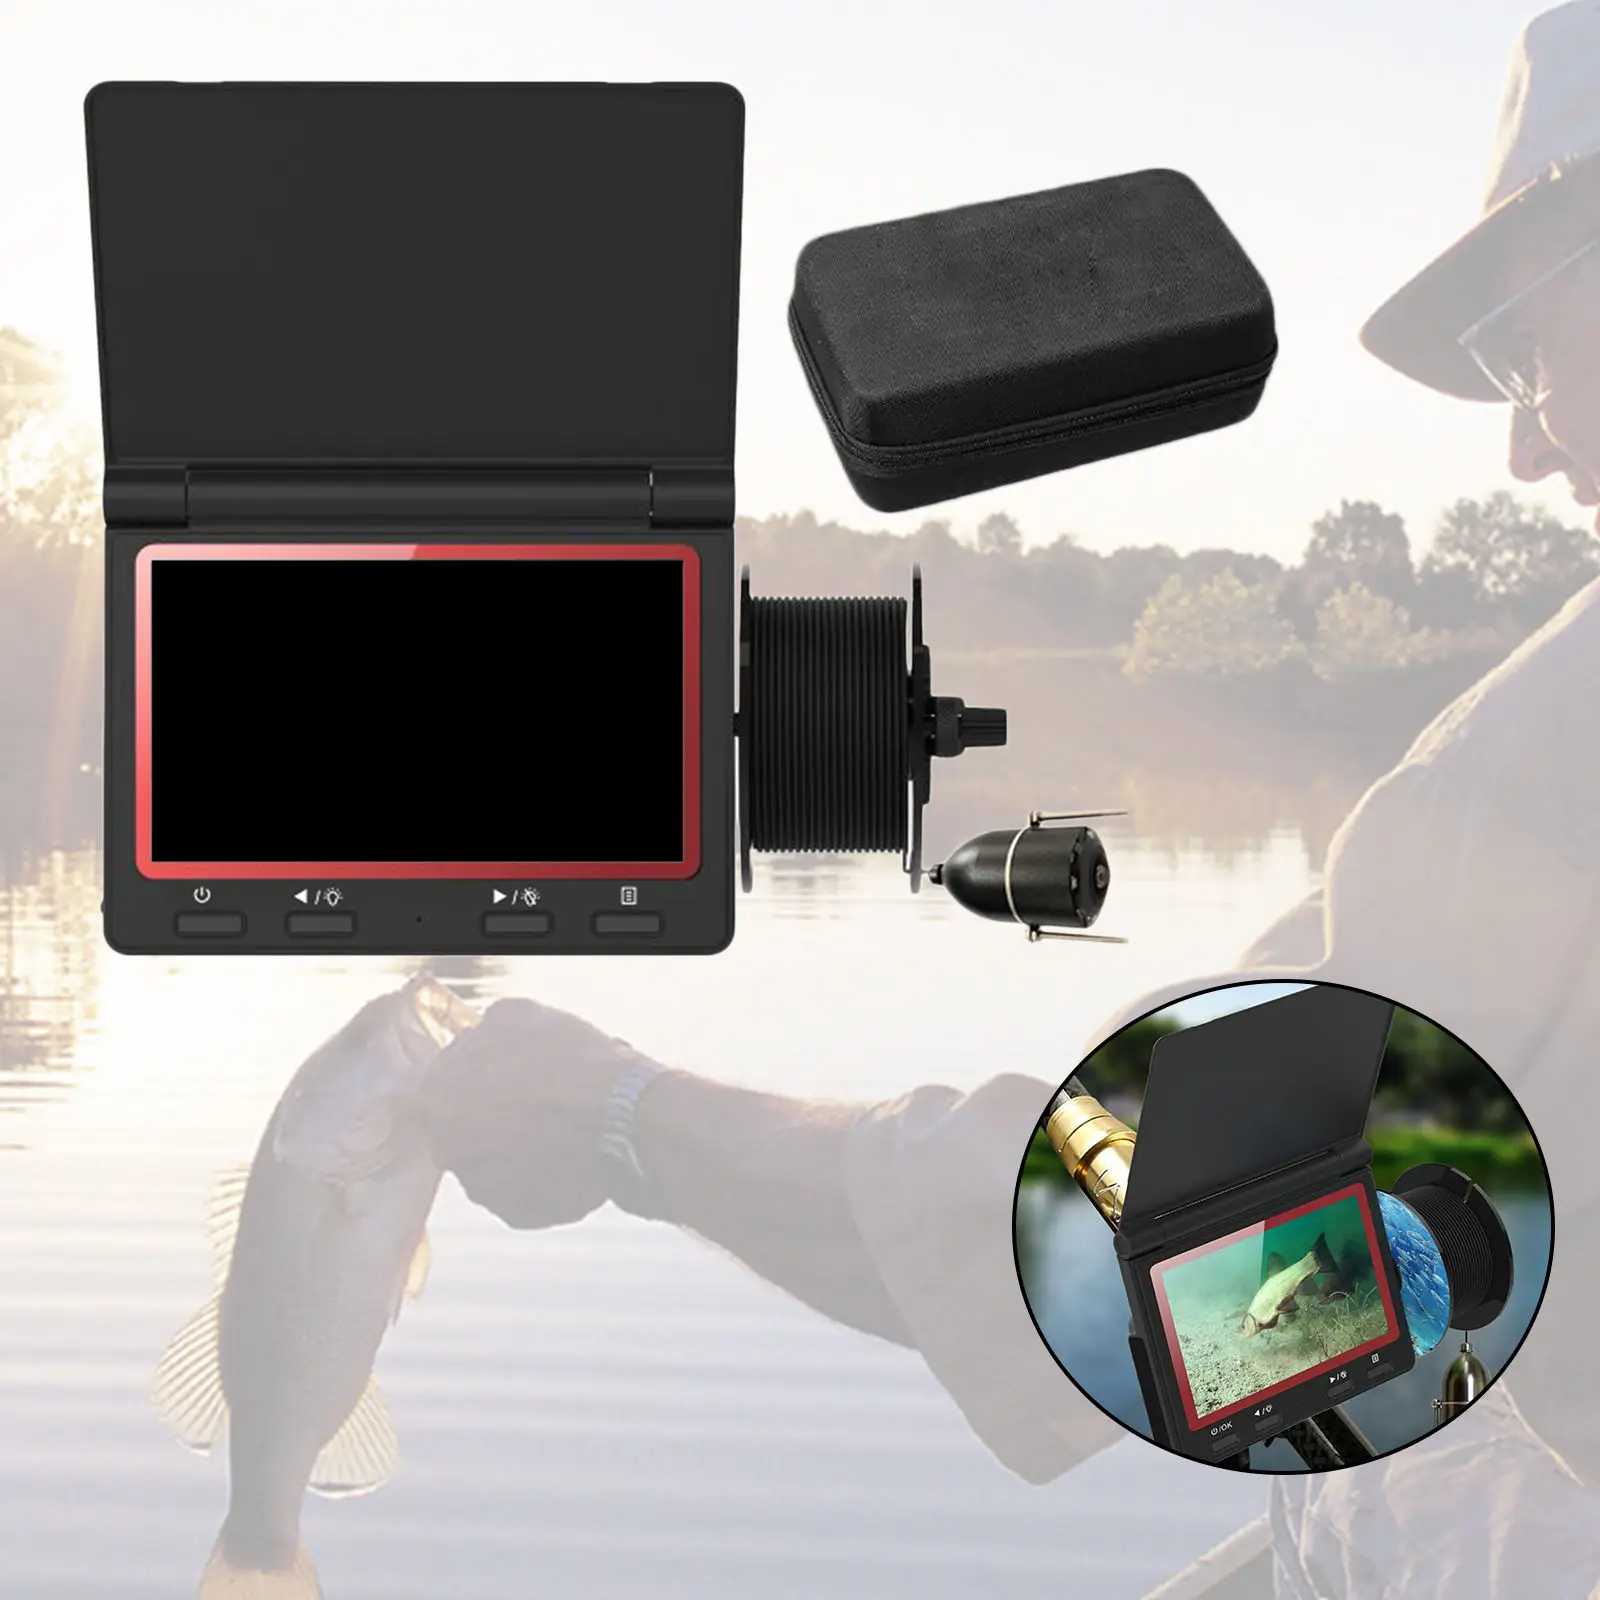 Underwater Fishing Camera IP68 Waterproof 30M Cable LCD Monitor Fish Finder for Ice Lake Kayak Sea Boat Fishing